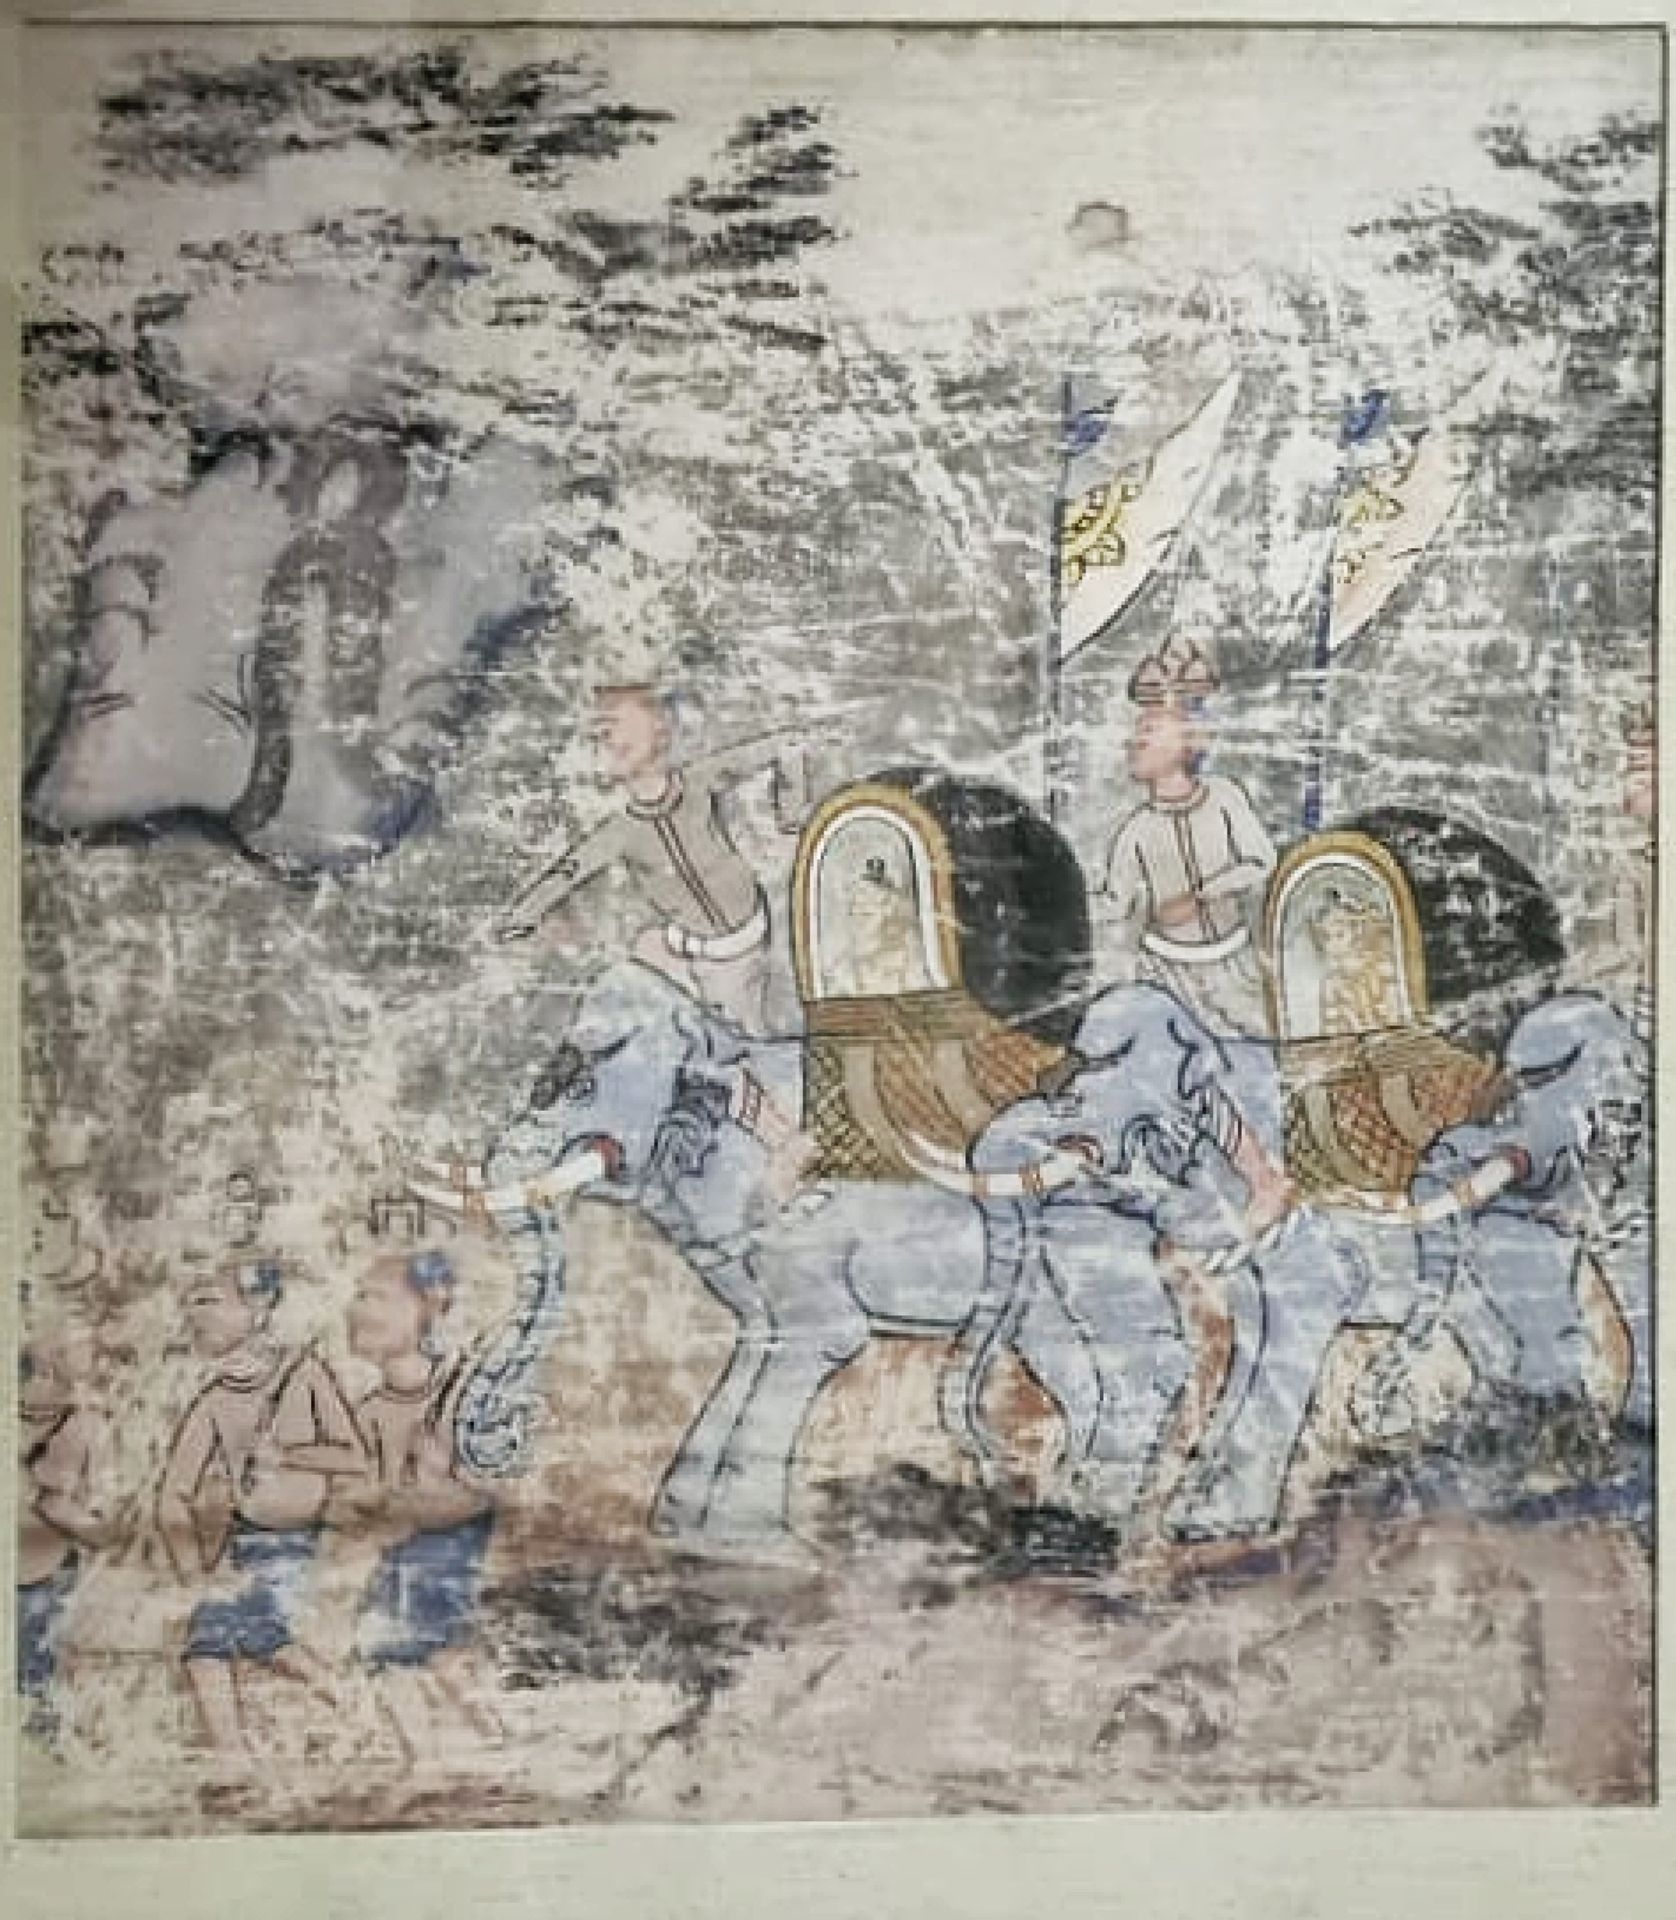 Null 暹罗，约1900年

游行

棉花上的墨水和颜料

60 x 54 cm

(事故和丢失的零件)